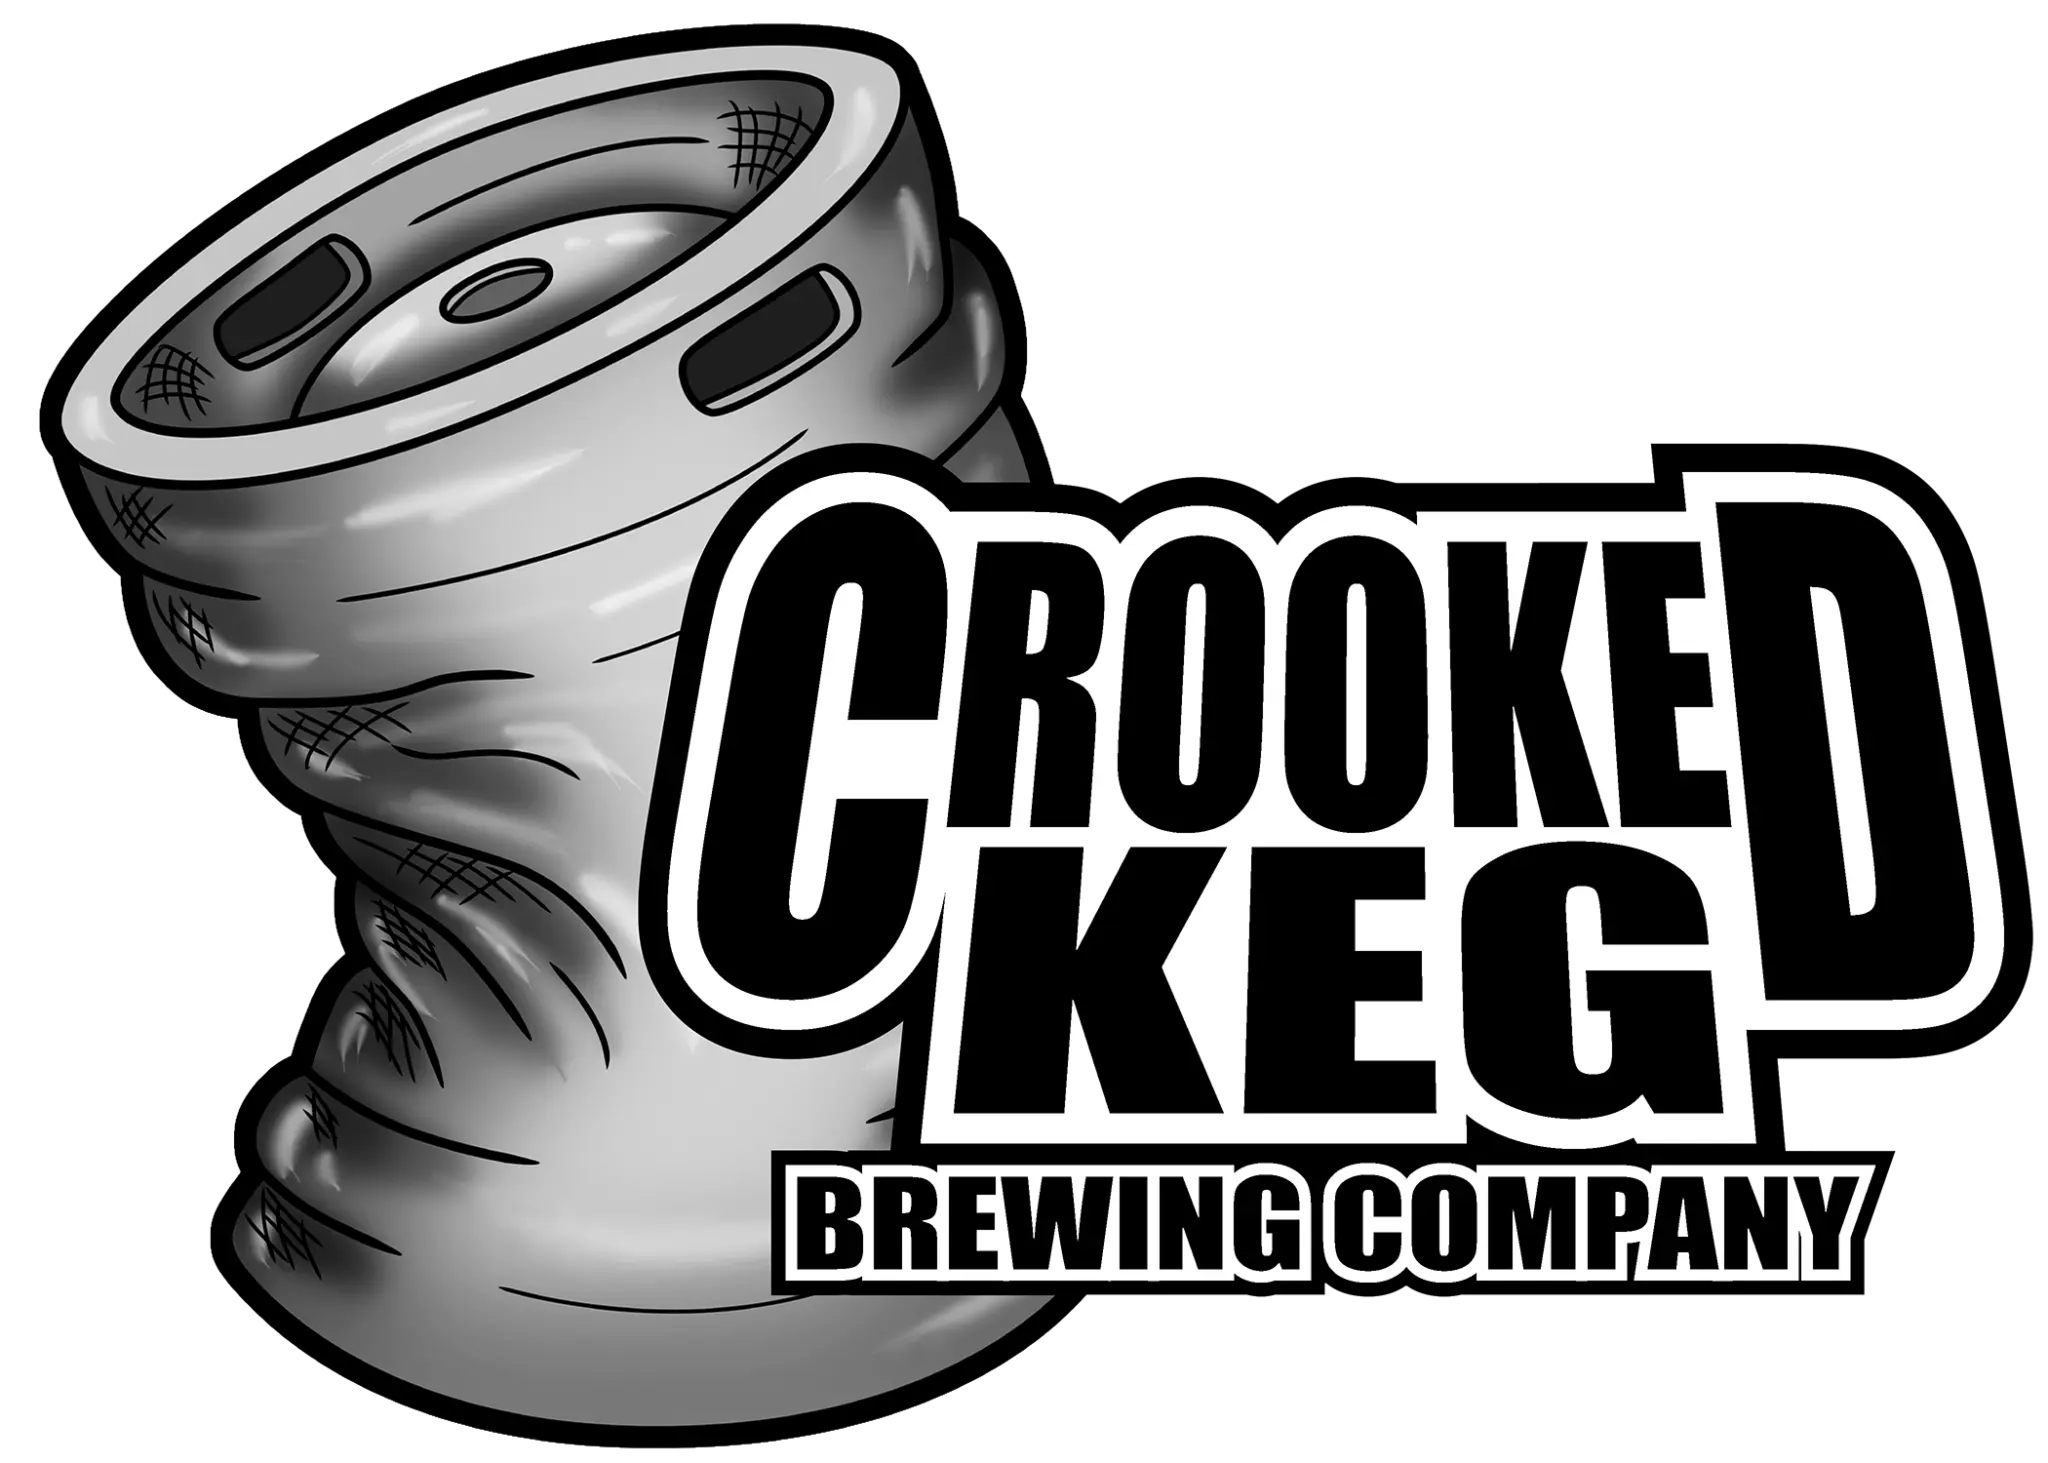 Crooked Keg Brewing Company